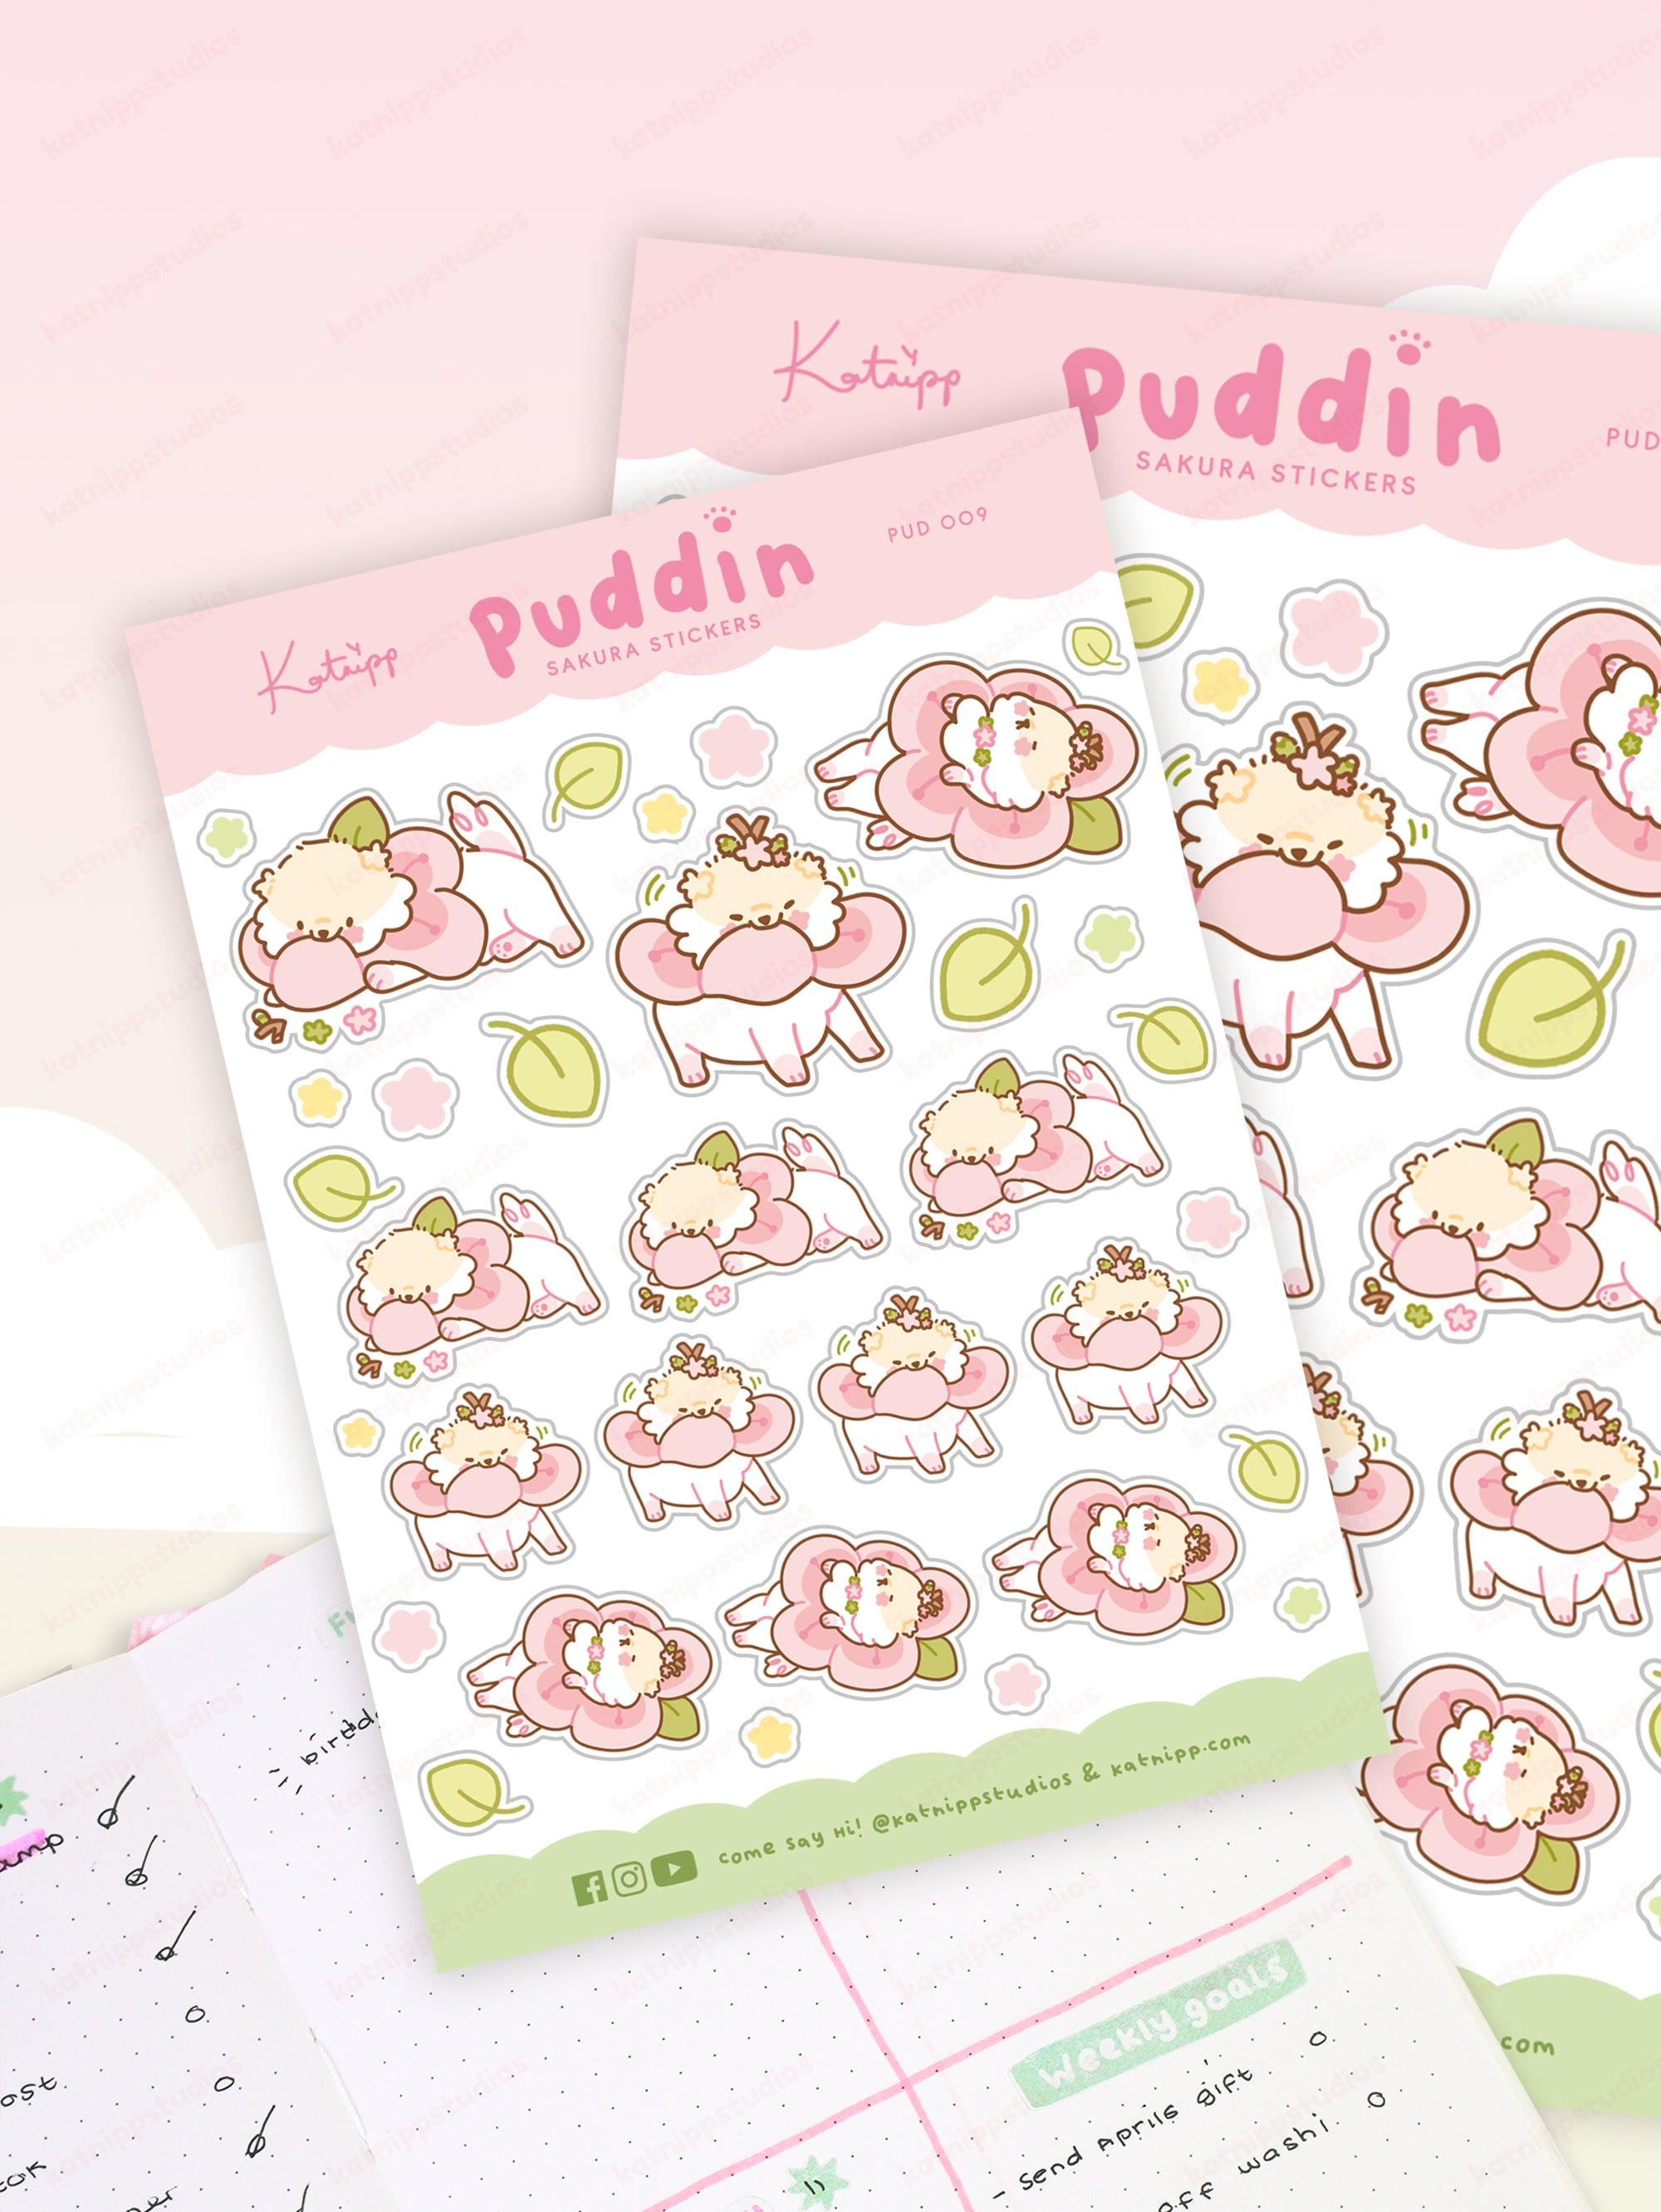 Puddin the Dog Sakura Planner Sticker - PUD 009 - Katnipp Studios